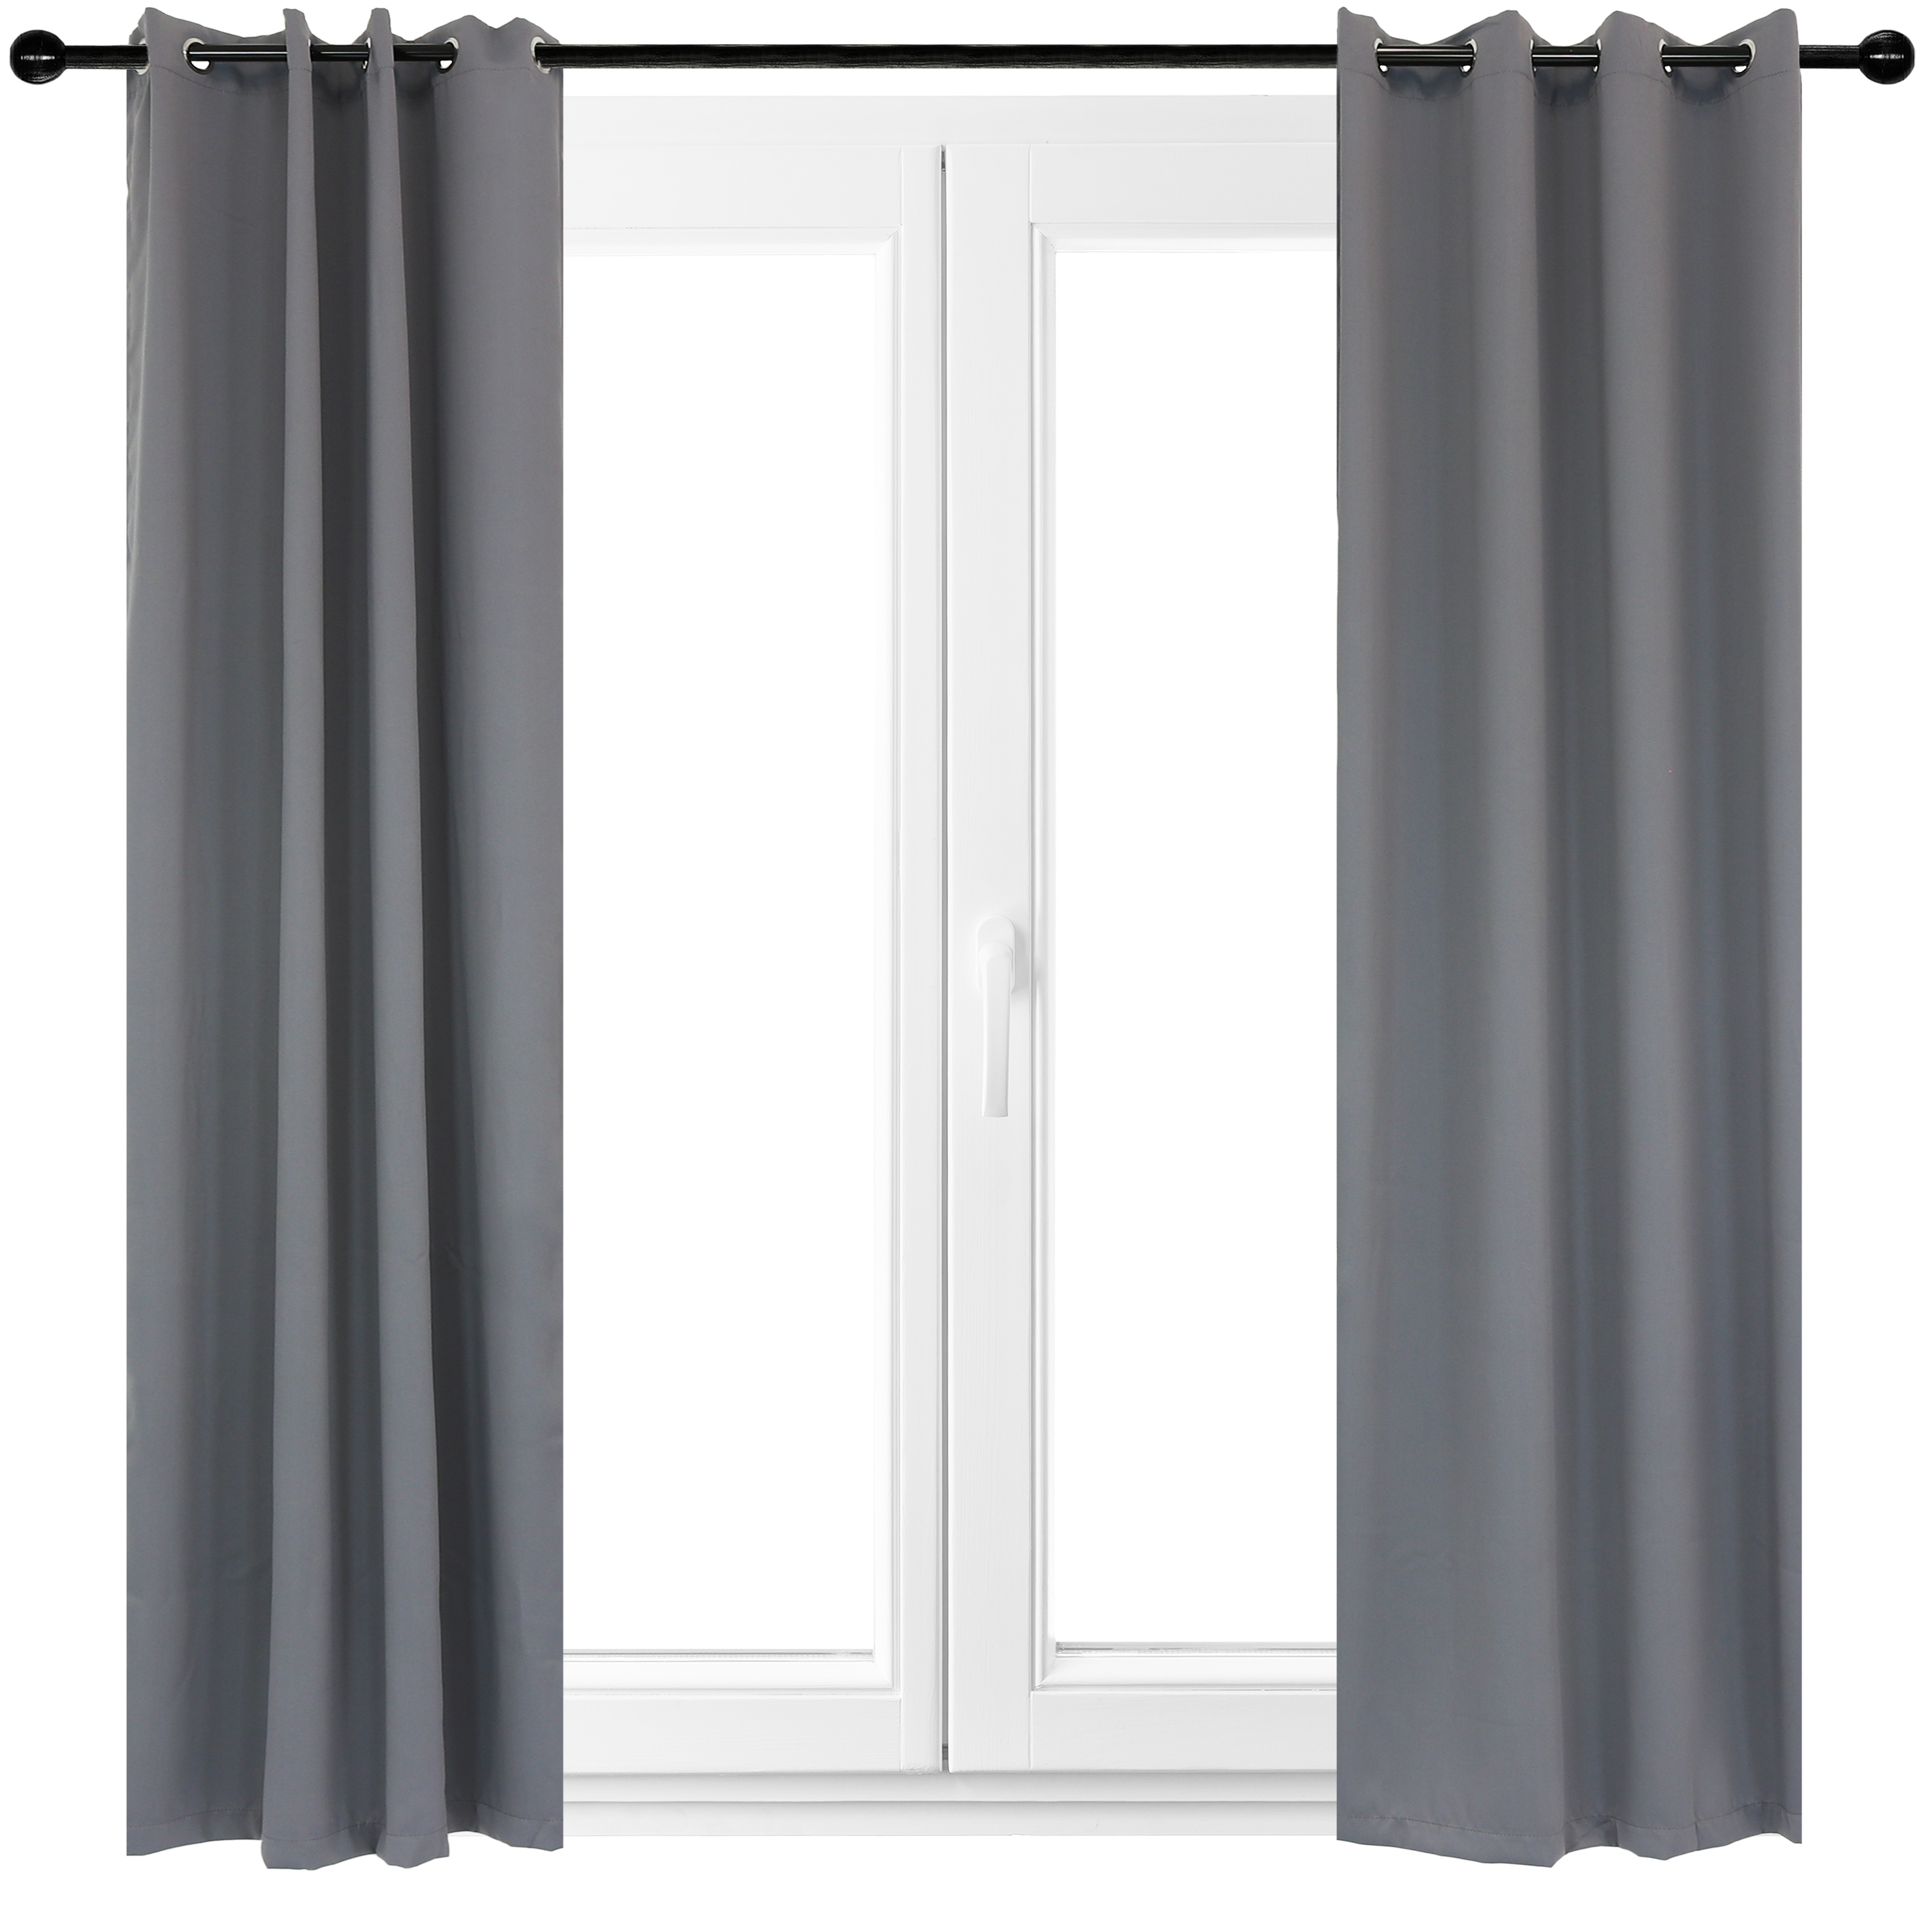 2 Indoor/Outdoor Blackout Curtain Panels with Grommet Top - 52 x 120 in (1.32 x 3 m)  - Gray